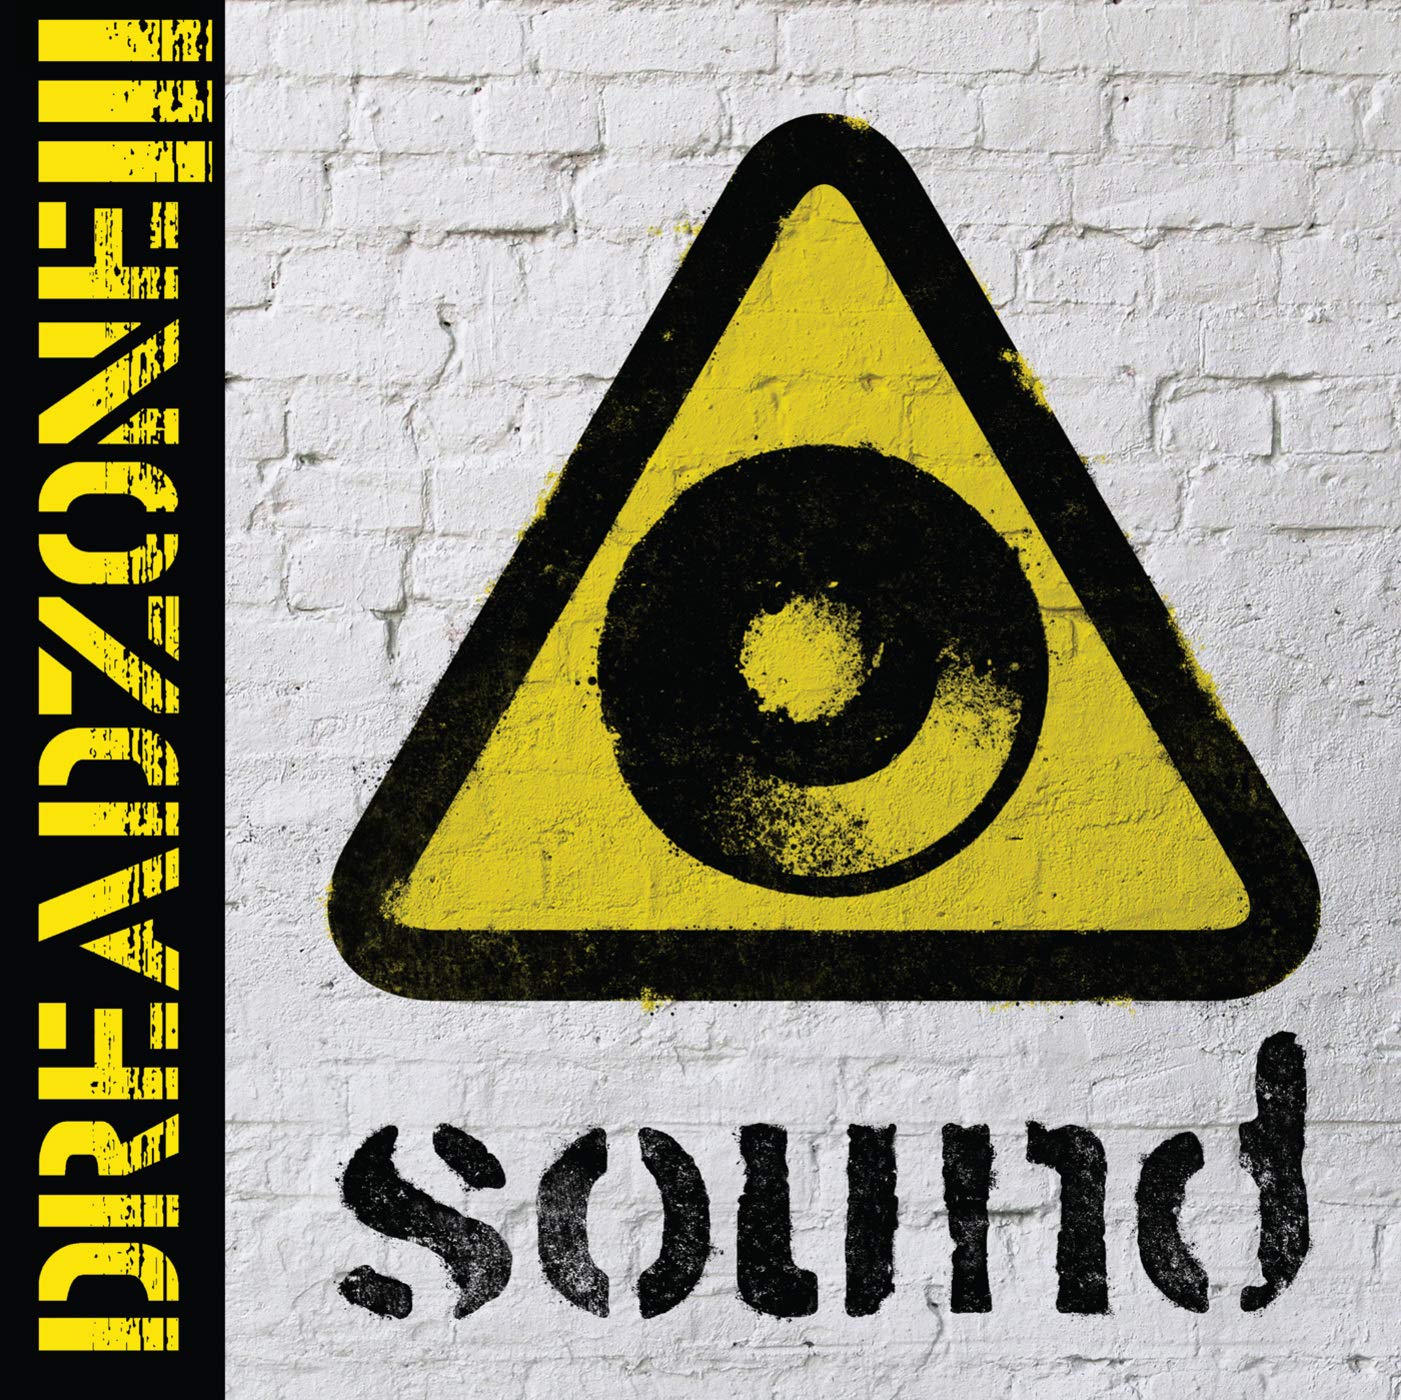 Dreadzone - Sound vinyl cover